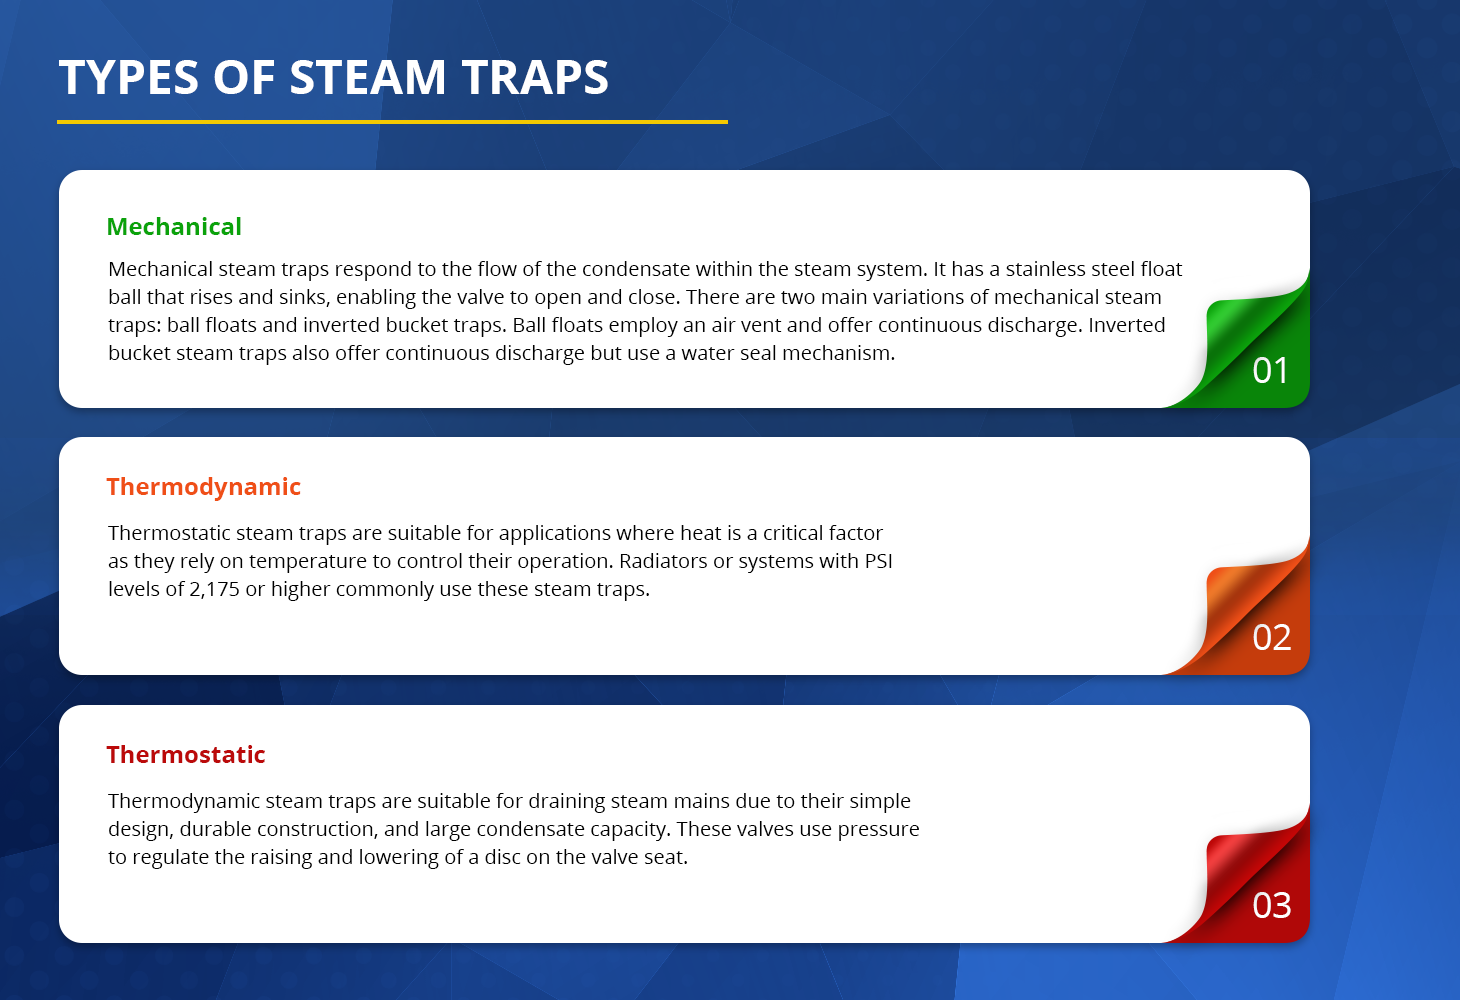 Types of Stream Traps